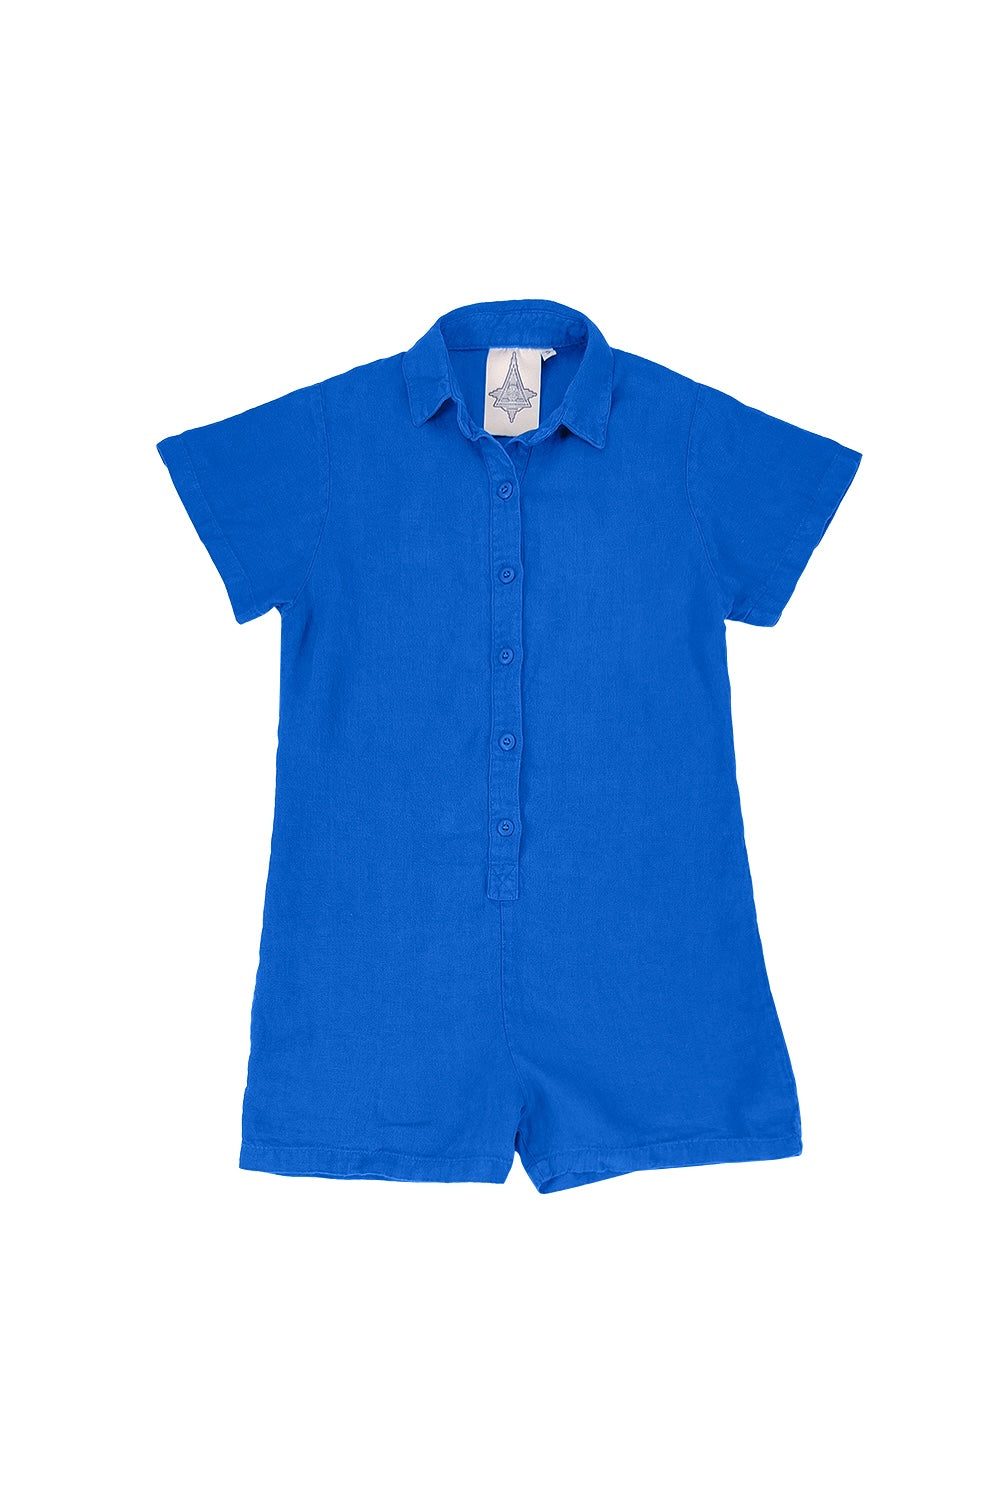 Stillwater Polo Romper | Jungmaven Hemp Clothing & Accessories / Color: Galaxy Blue